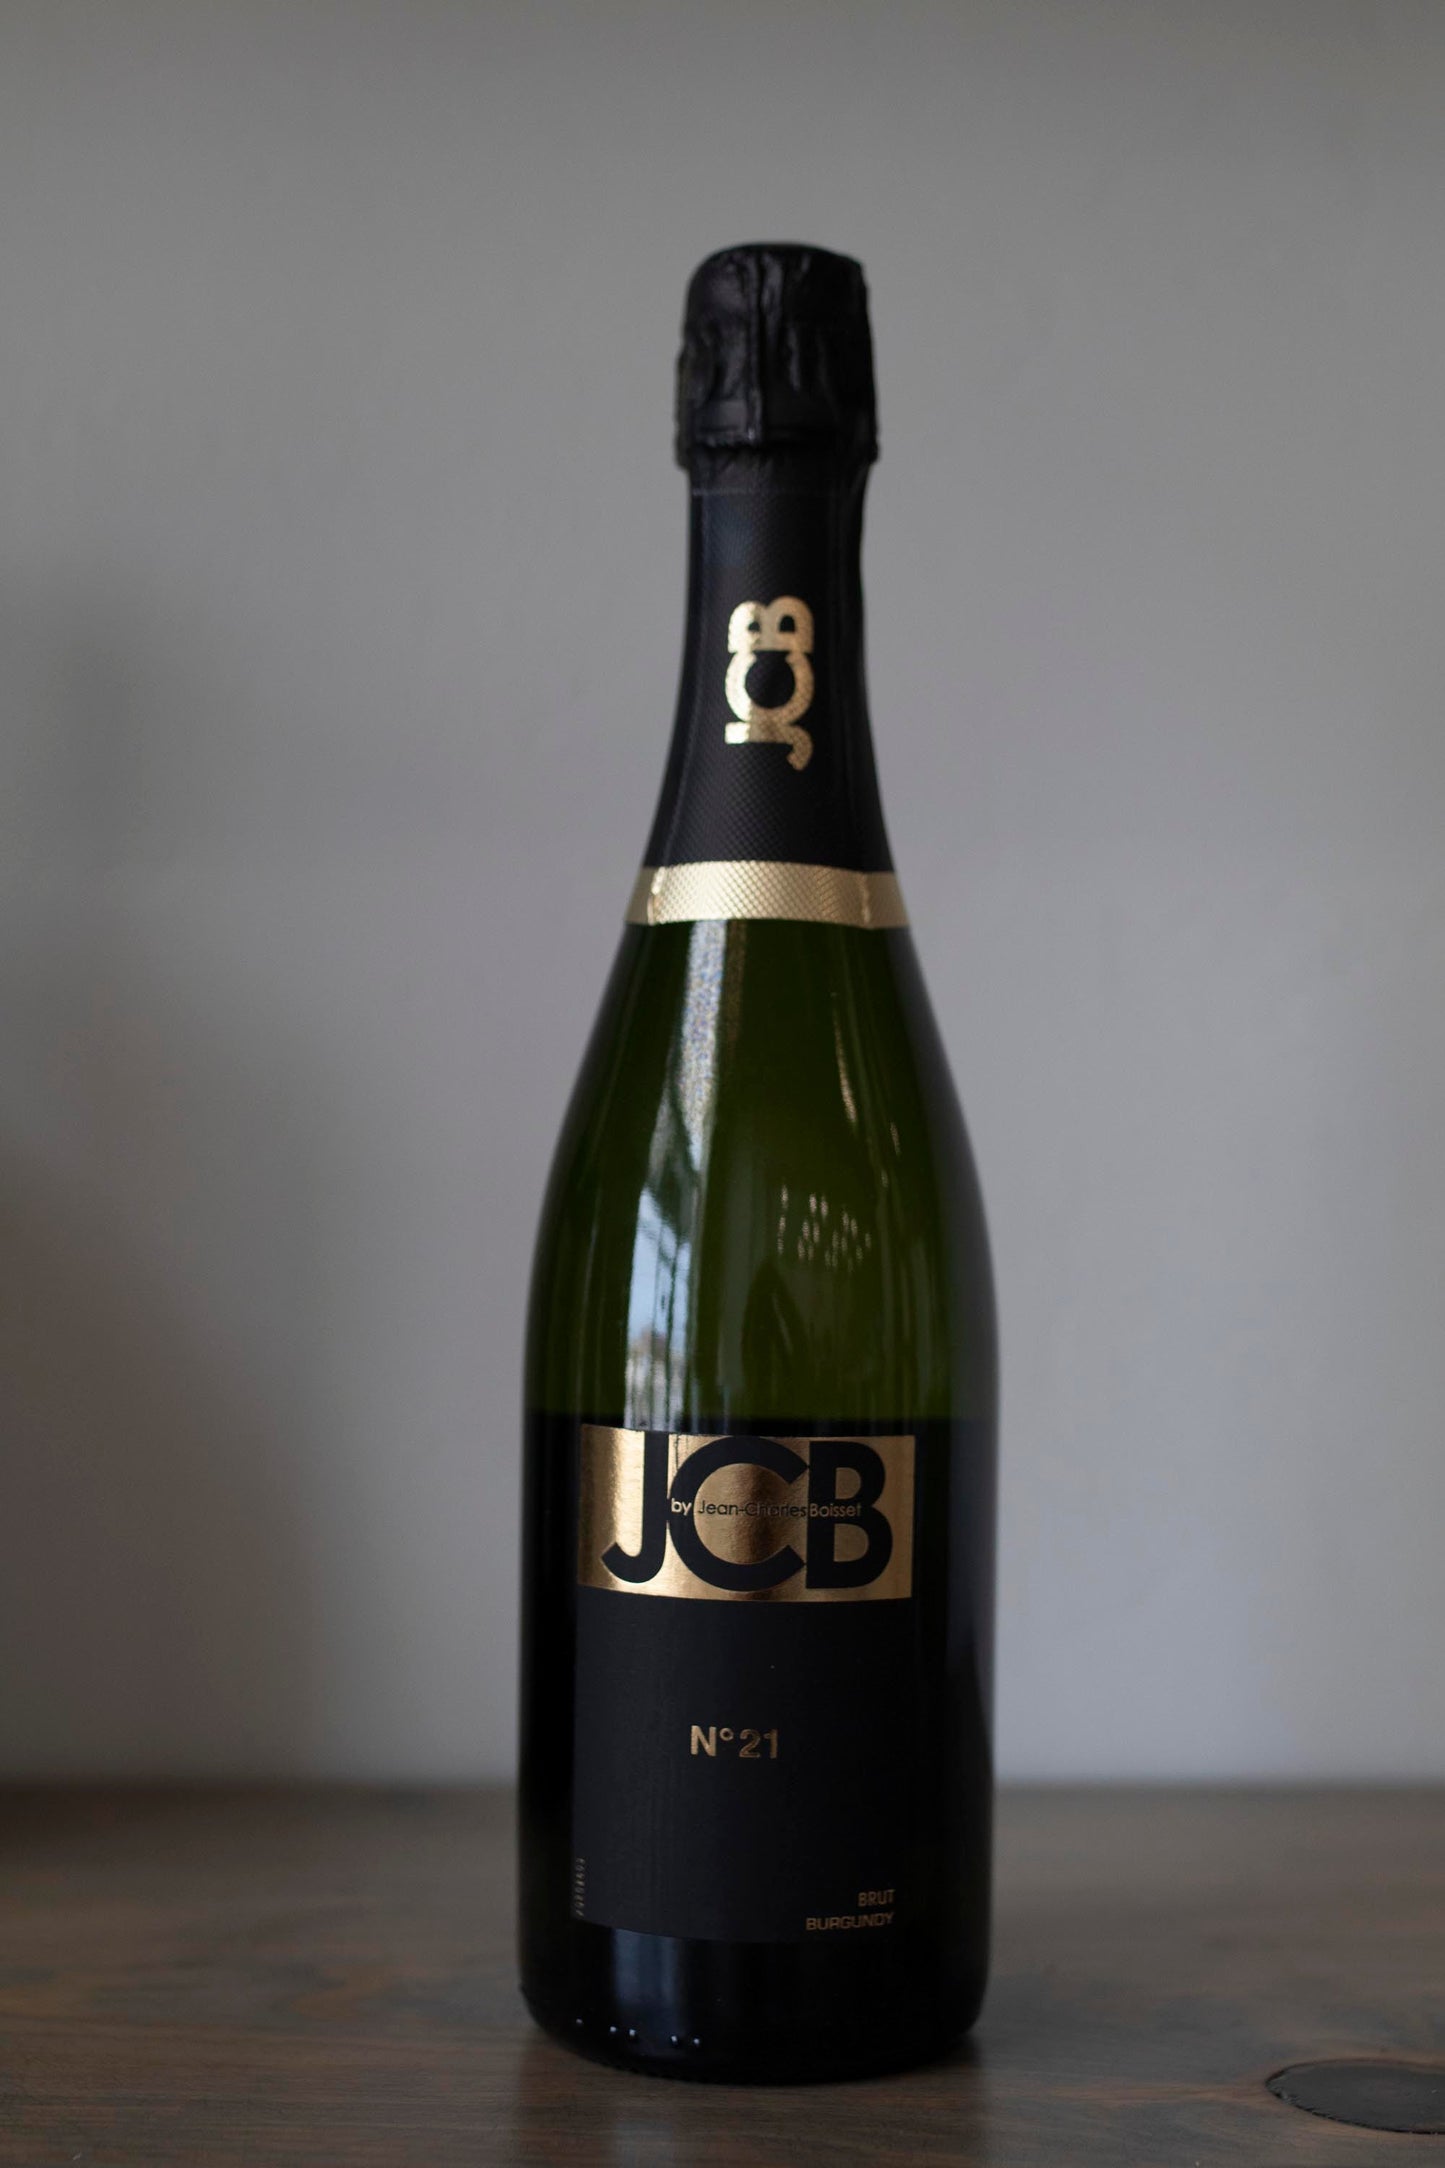 Bottle of Jcb brut #21 found at Vine & Board in 3809 NW 166th St Suite 1, Edmond, OK 73012